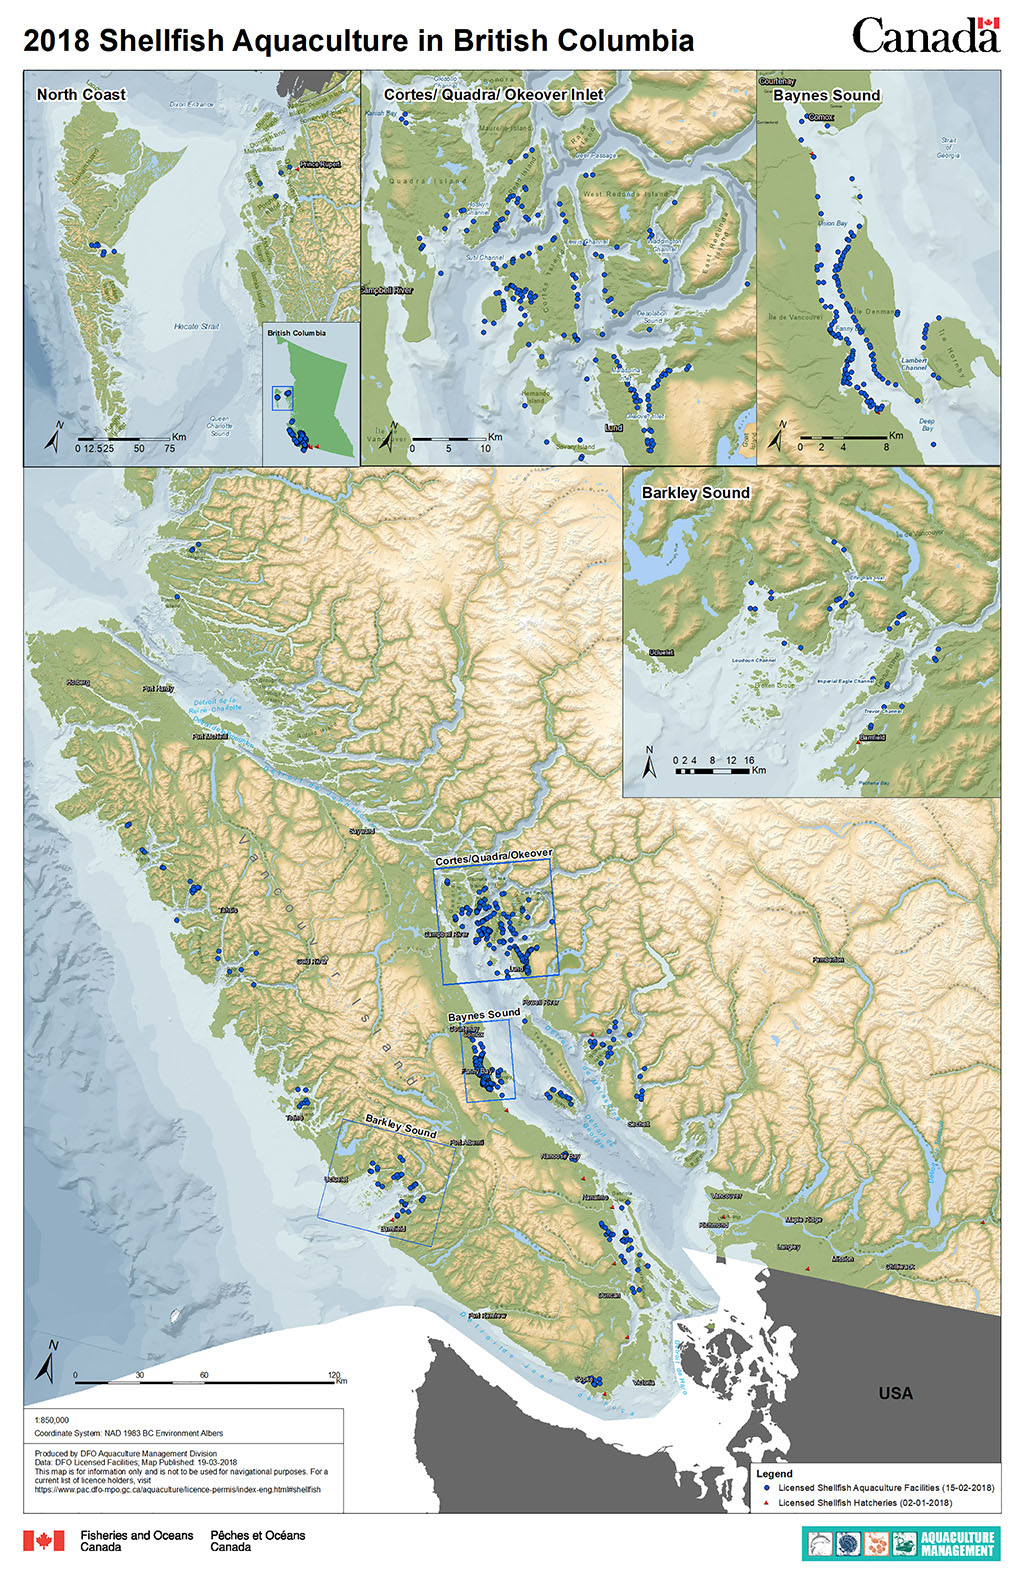 Figure 2: Map of shellfish aquaculture facilities in British Columbia, 2018 